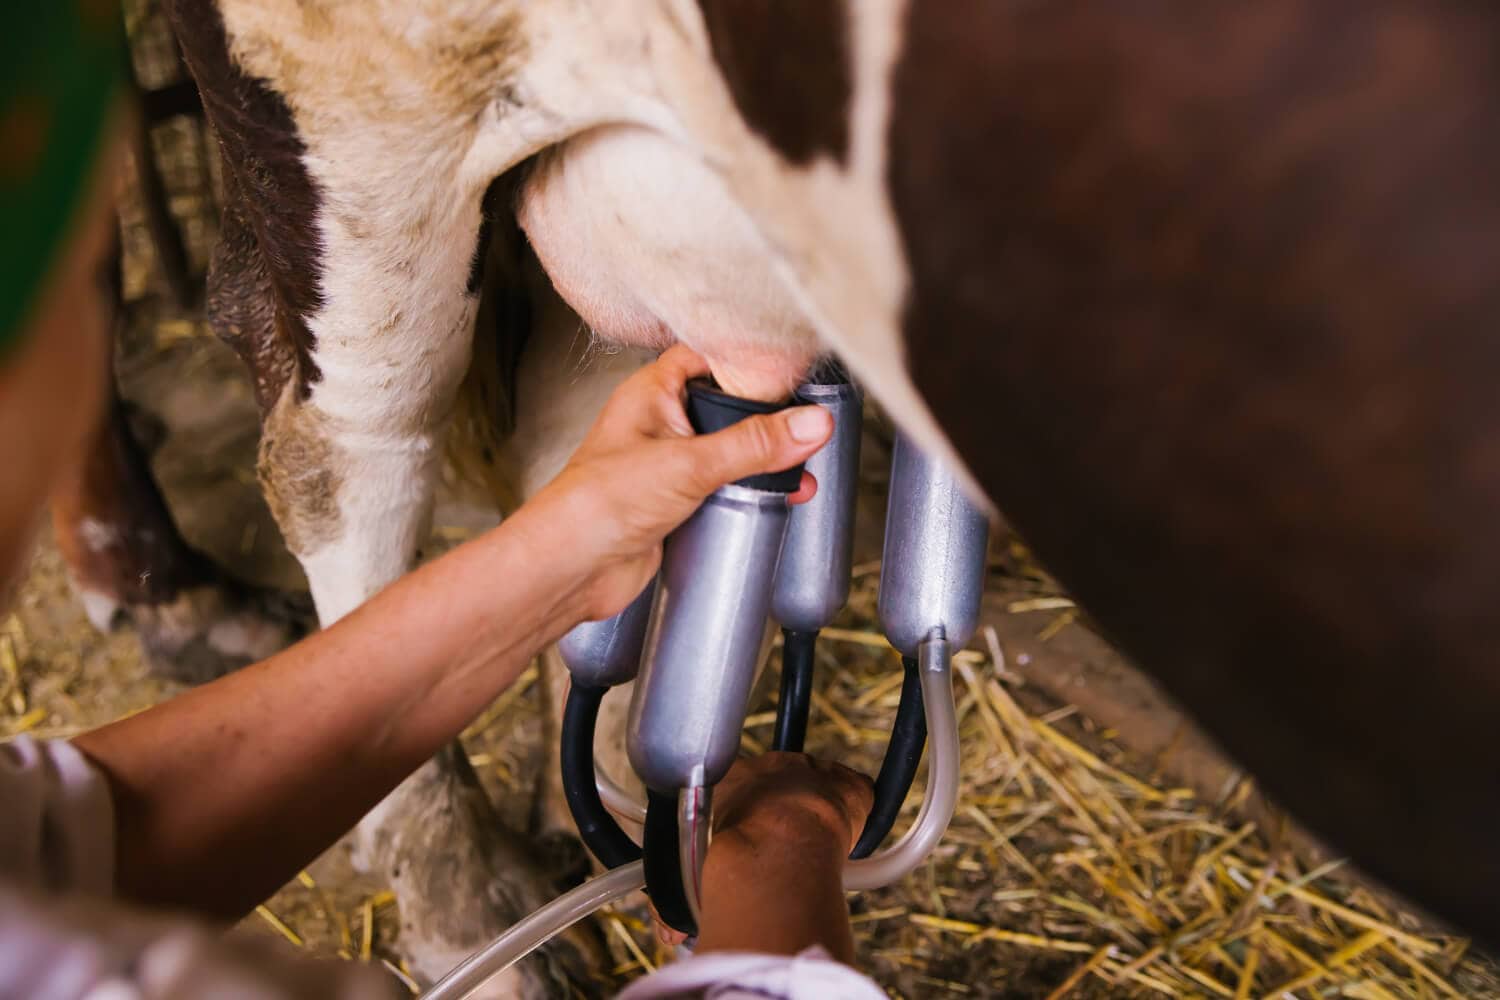 Tipos de ordenha: Manejo de animais na ordenha da vaca leiteira. - Agro ...